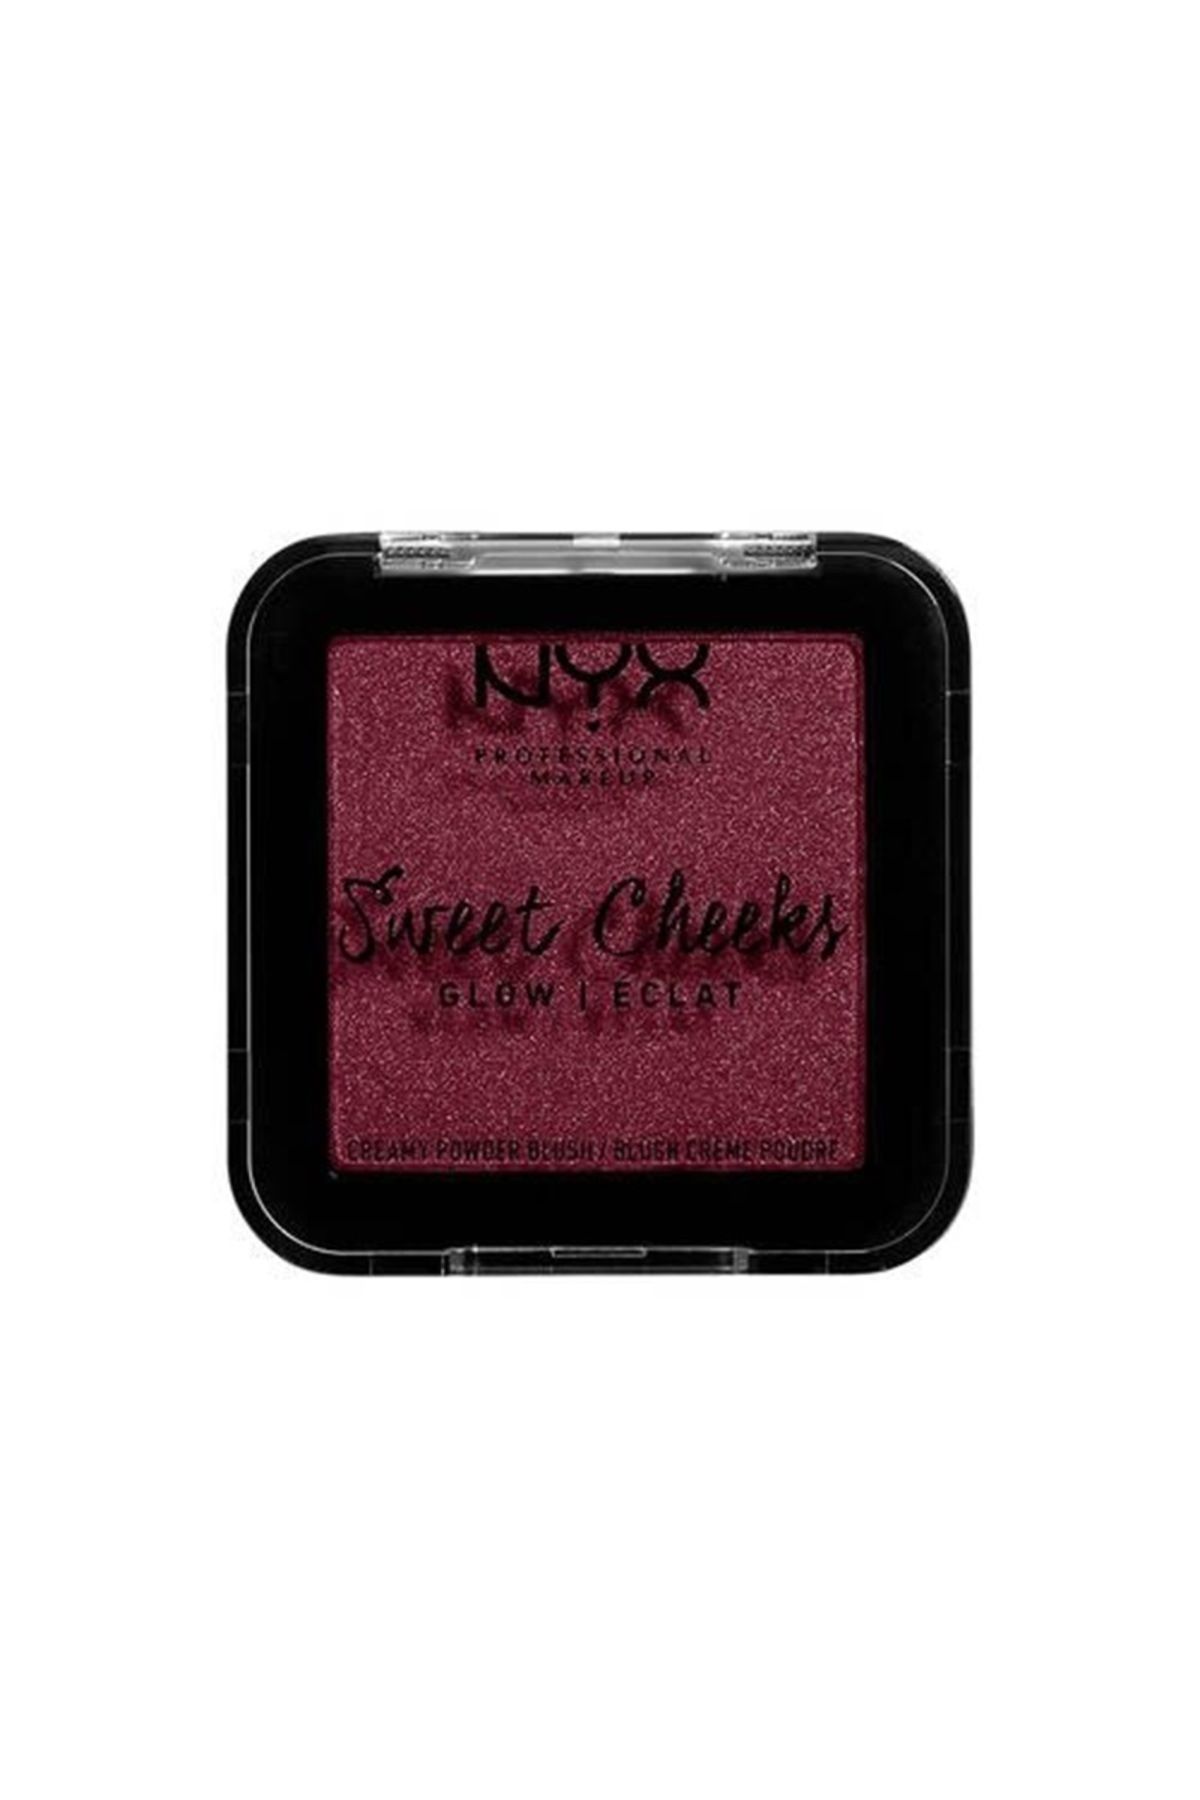 NYX Professional Makeup رژگونه درخشان گلو نیکس Sweet Cheeks Legendary Red Shimmering Blush Red Riot 5 گرم